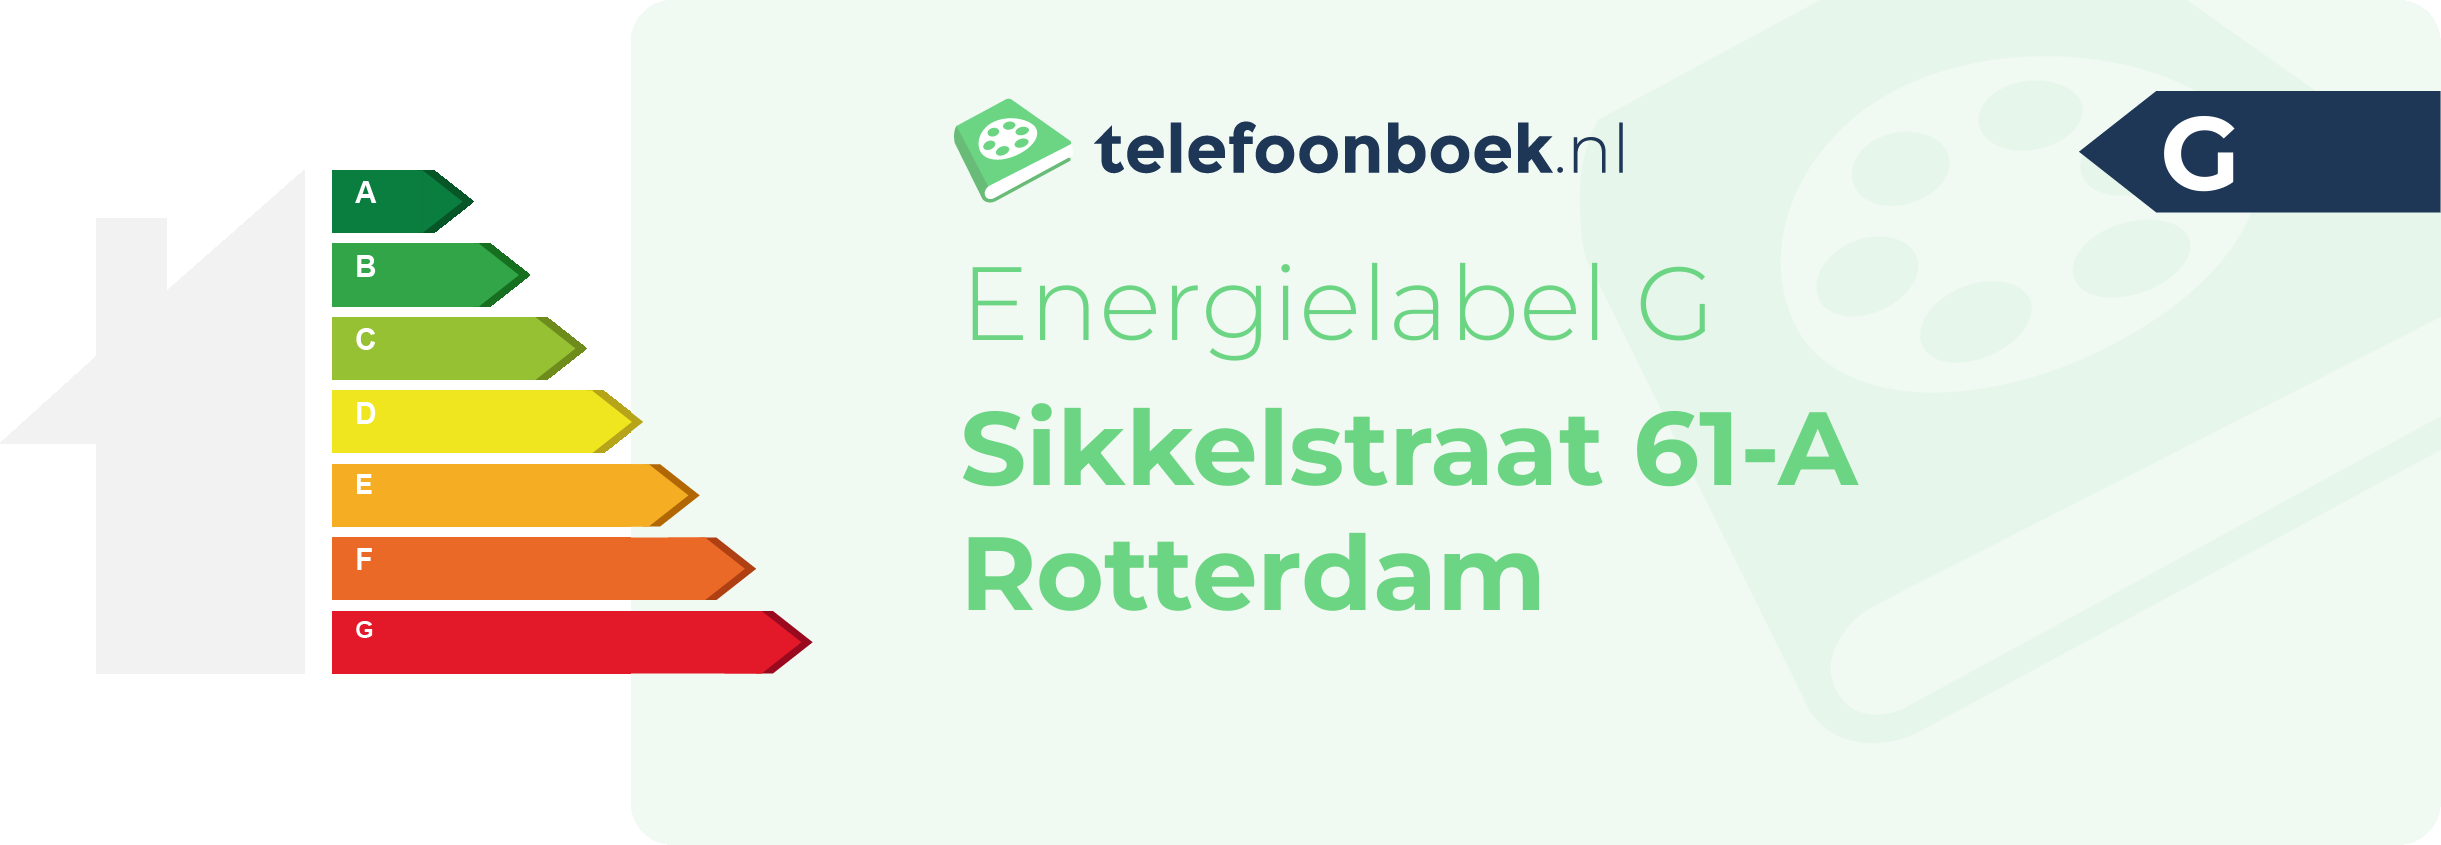 Energielabel Sikkelstraat 61-A Rotterdam